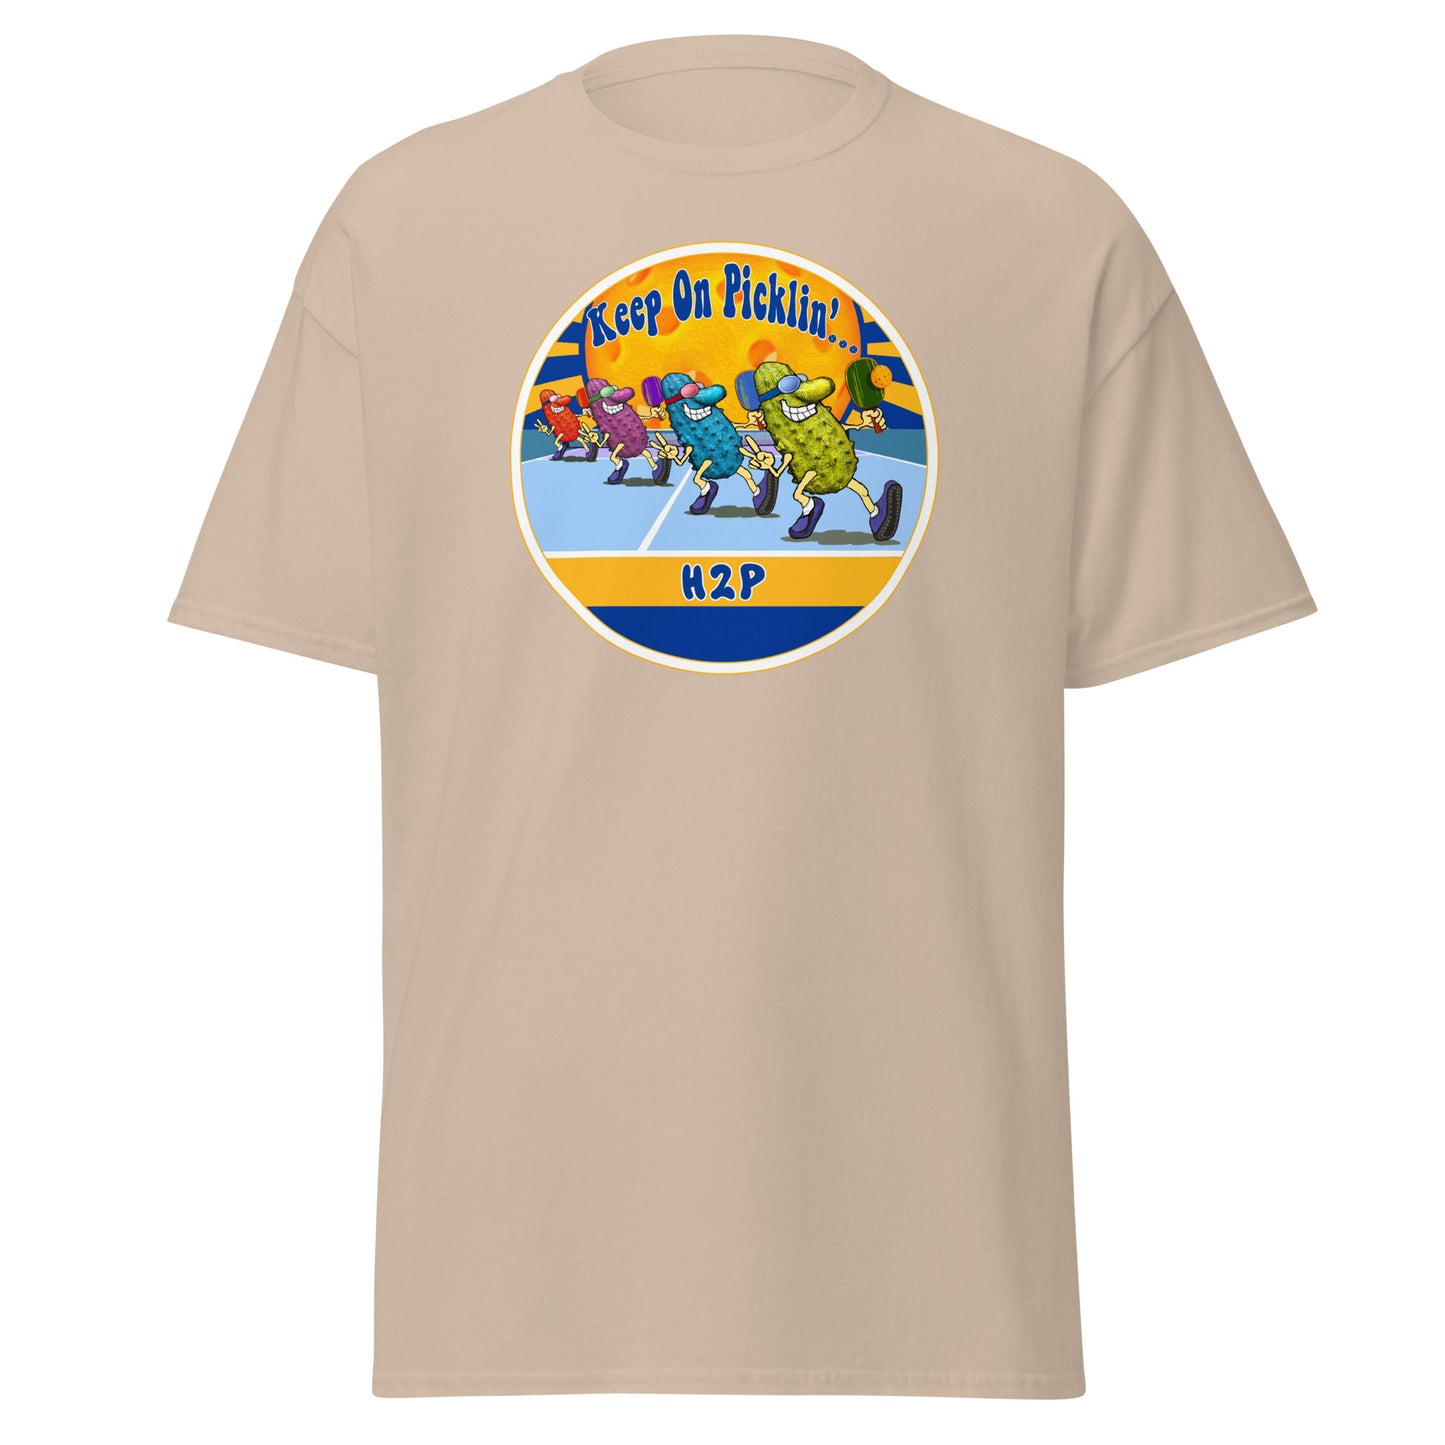 Pitt Panthers Pickleball Shirt, Short-sleeve Tee, Pickleball Sun Graphic